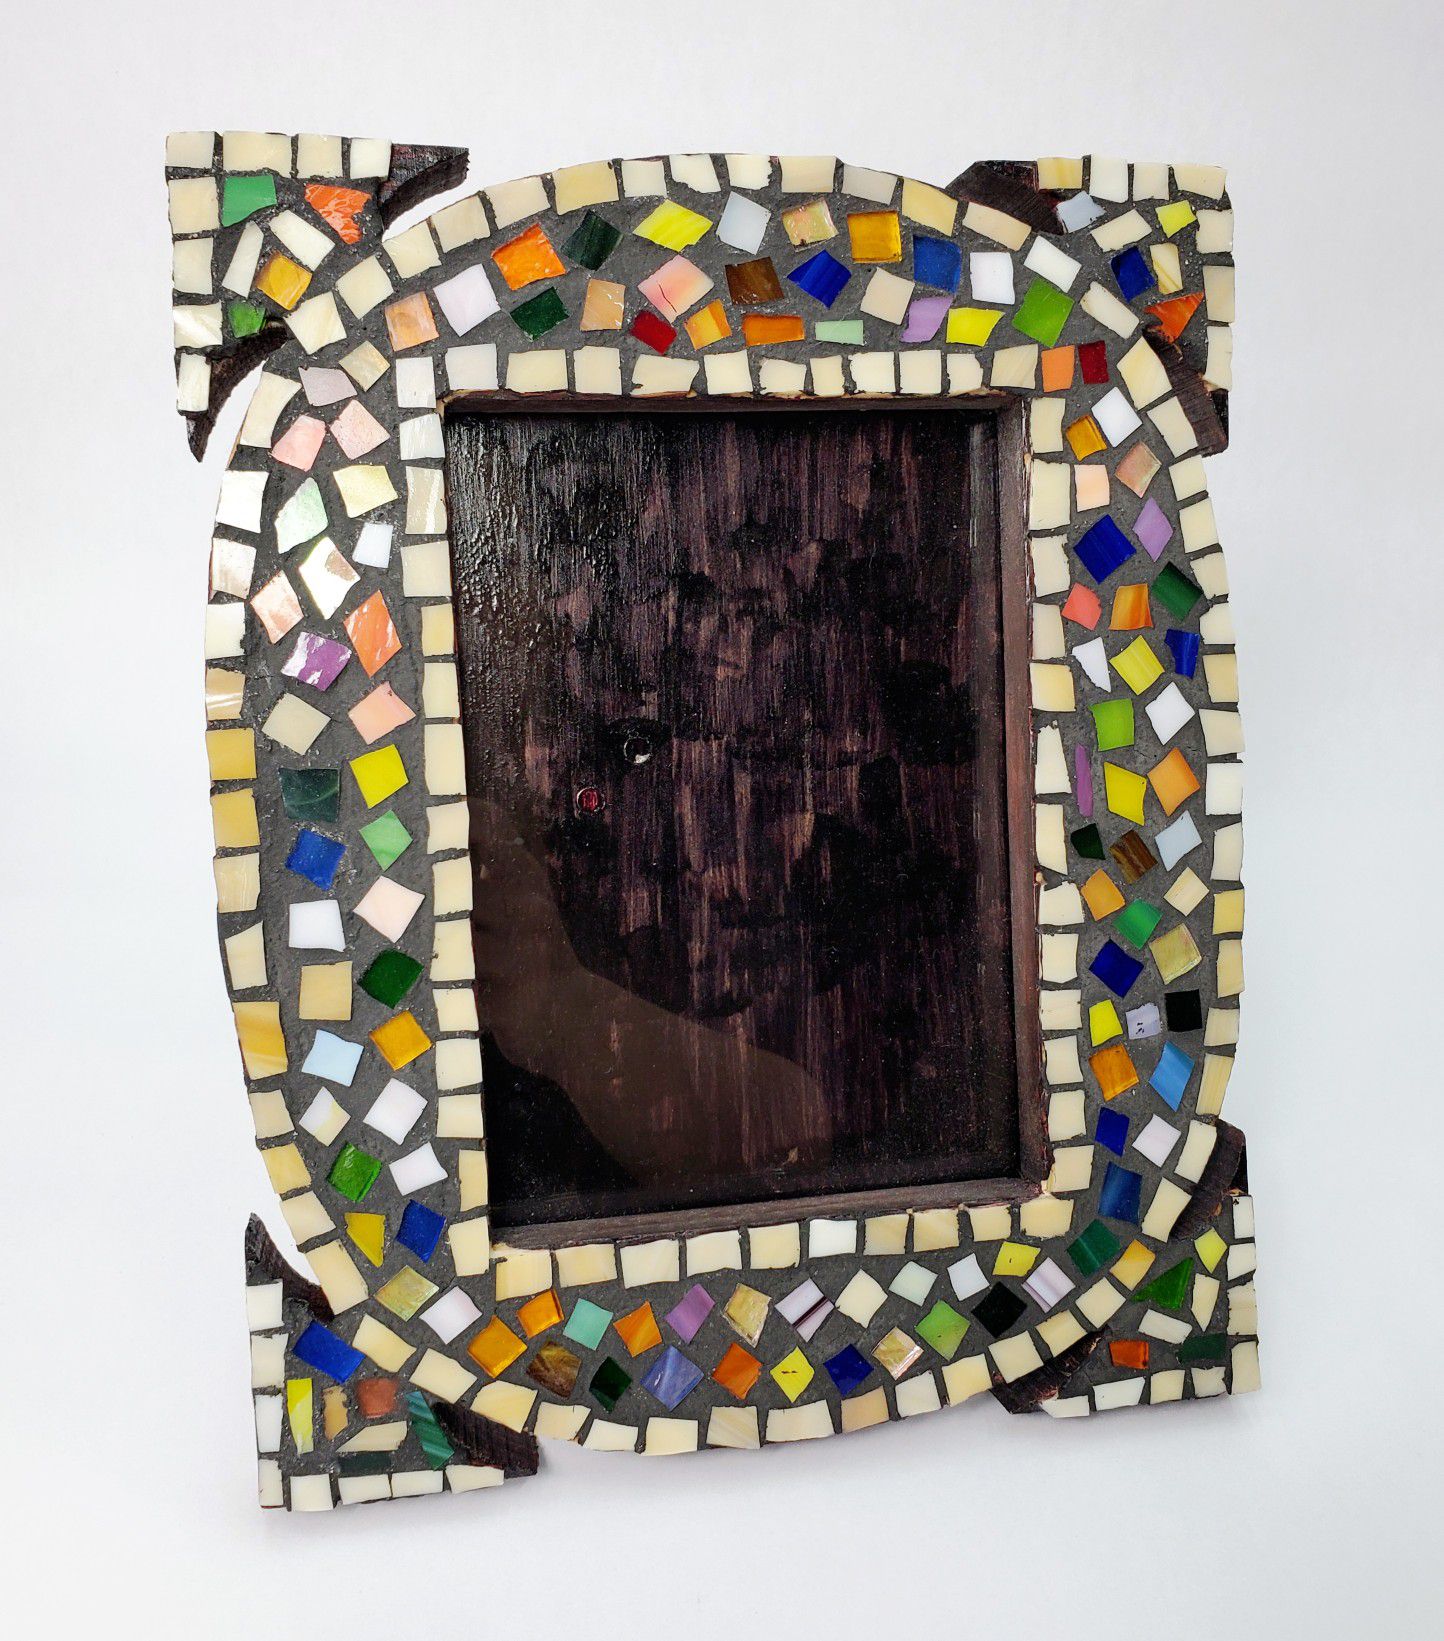 Artistic Handmade Multi-colored Mosaic Tabletop 5x7 Photo Frame